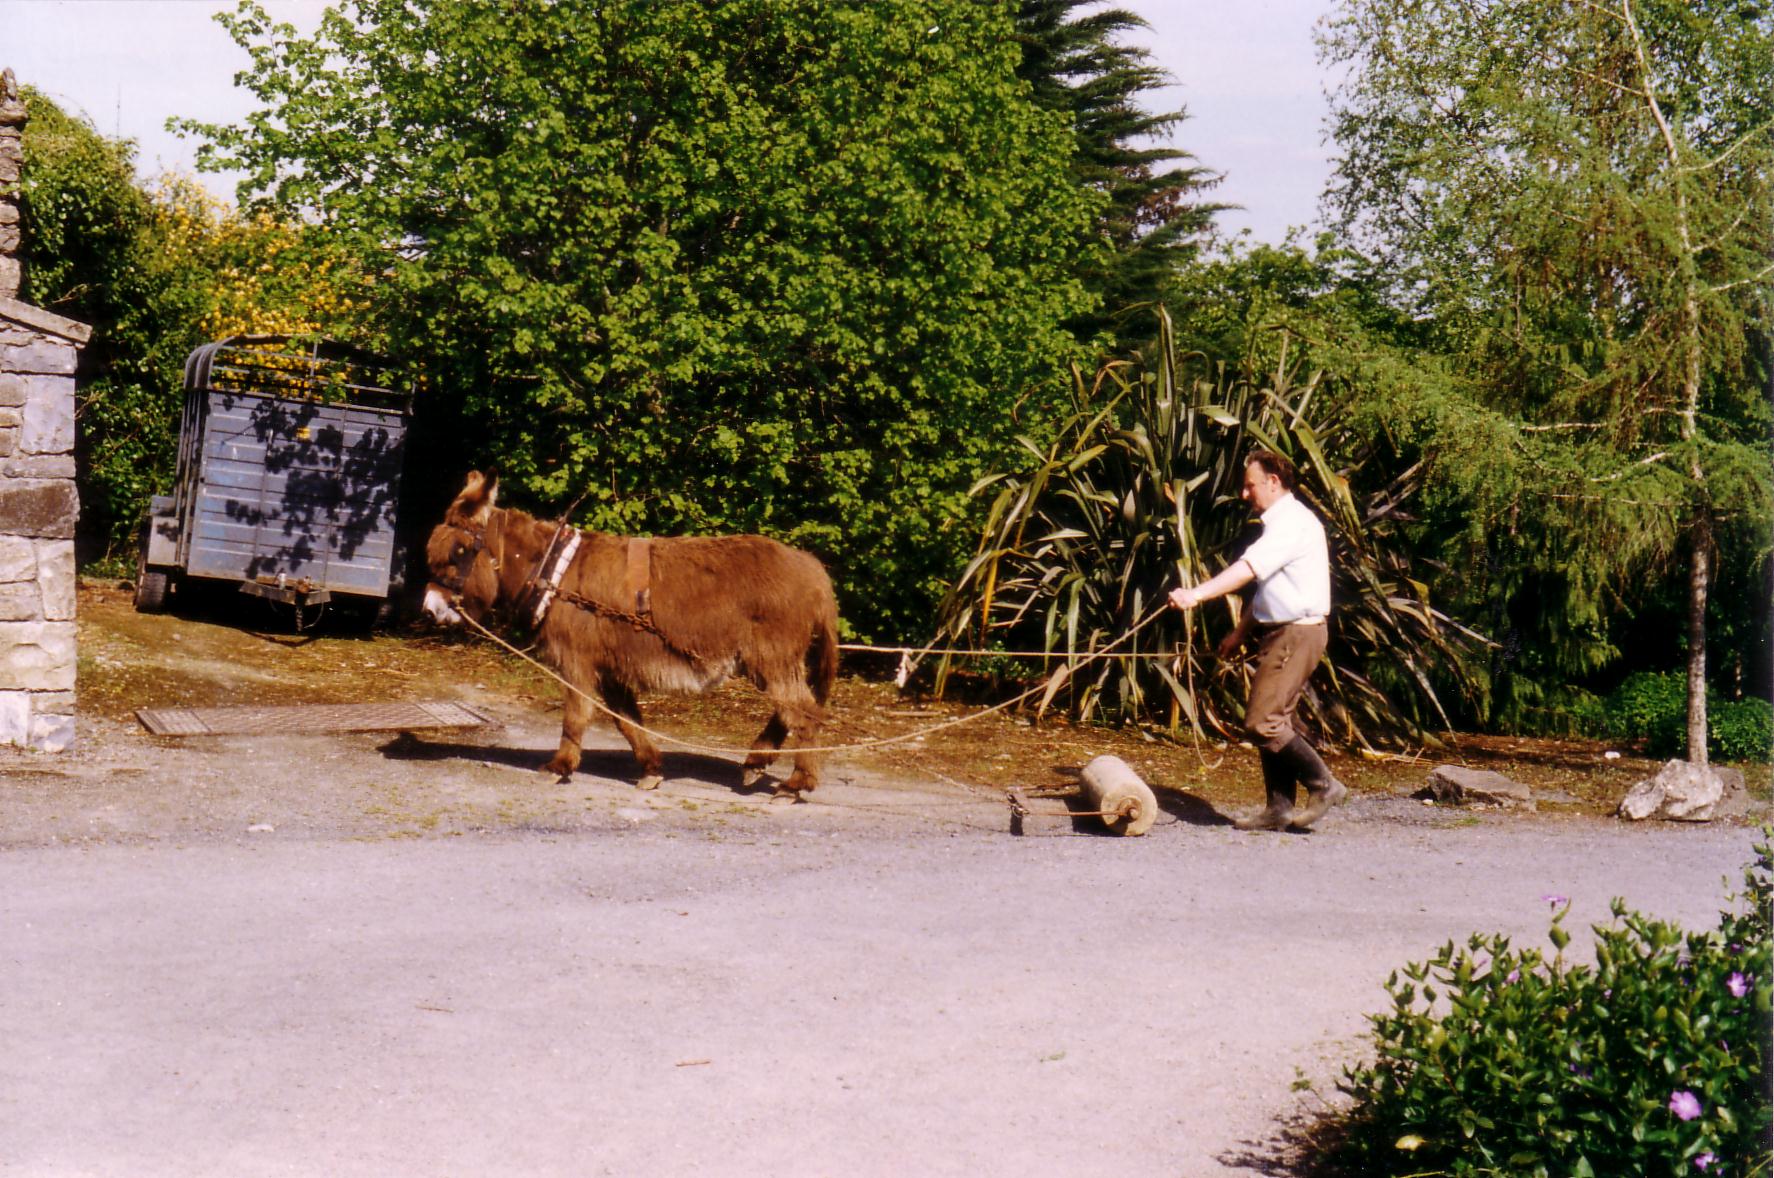 Donkey powered roller at Bunratty Folk Park